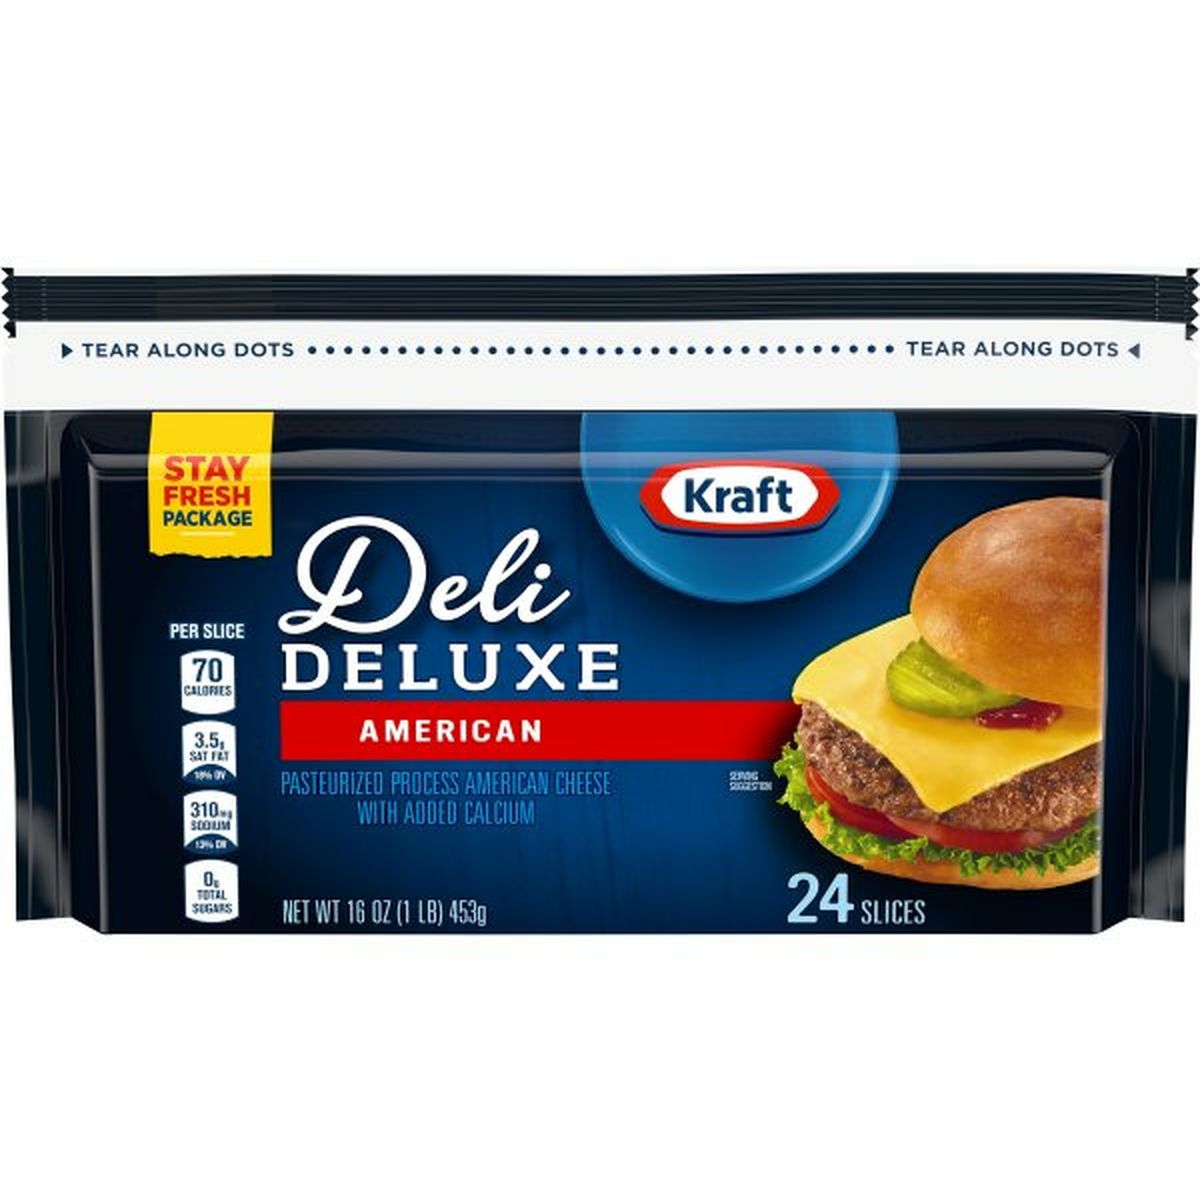 Calories in Kraft Deli Deluxe American Cheese Slices